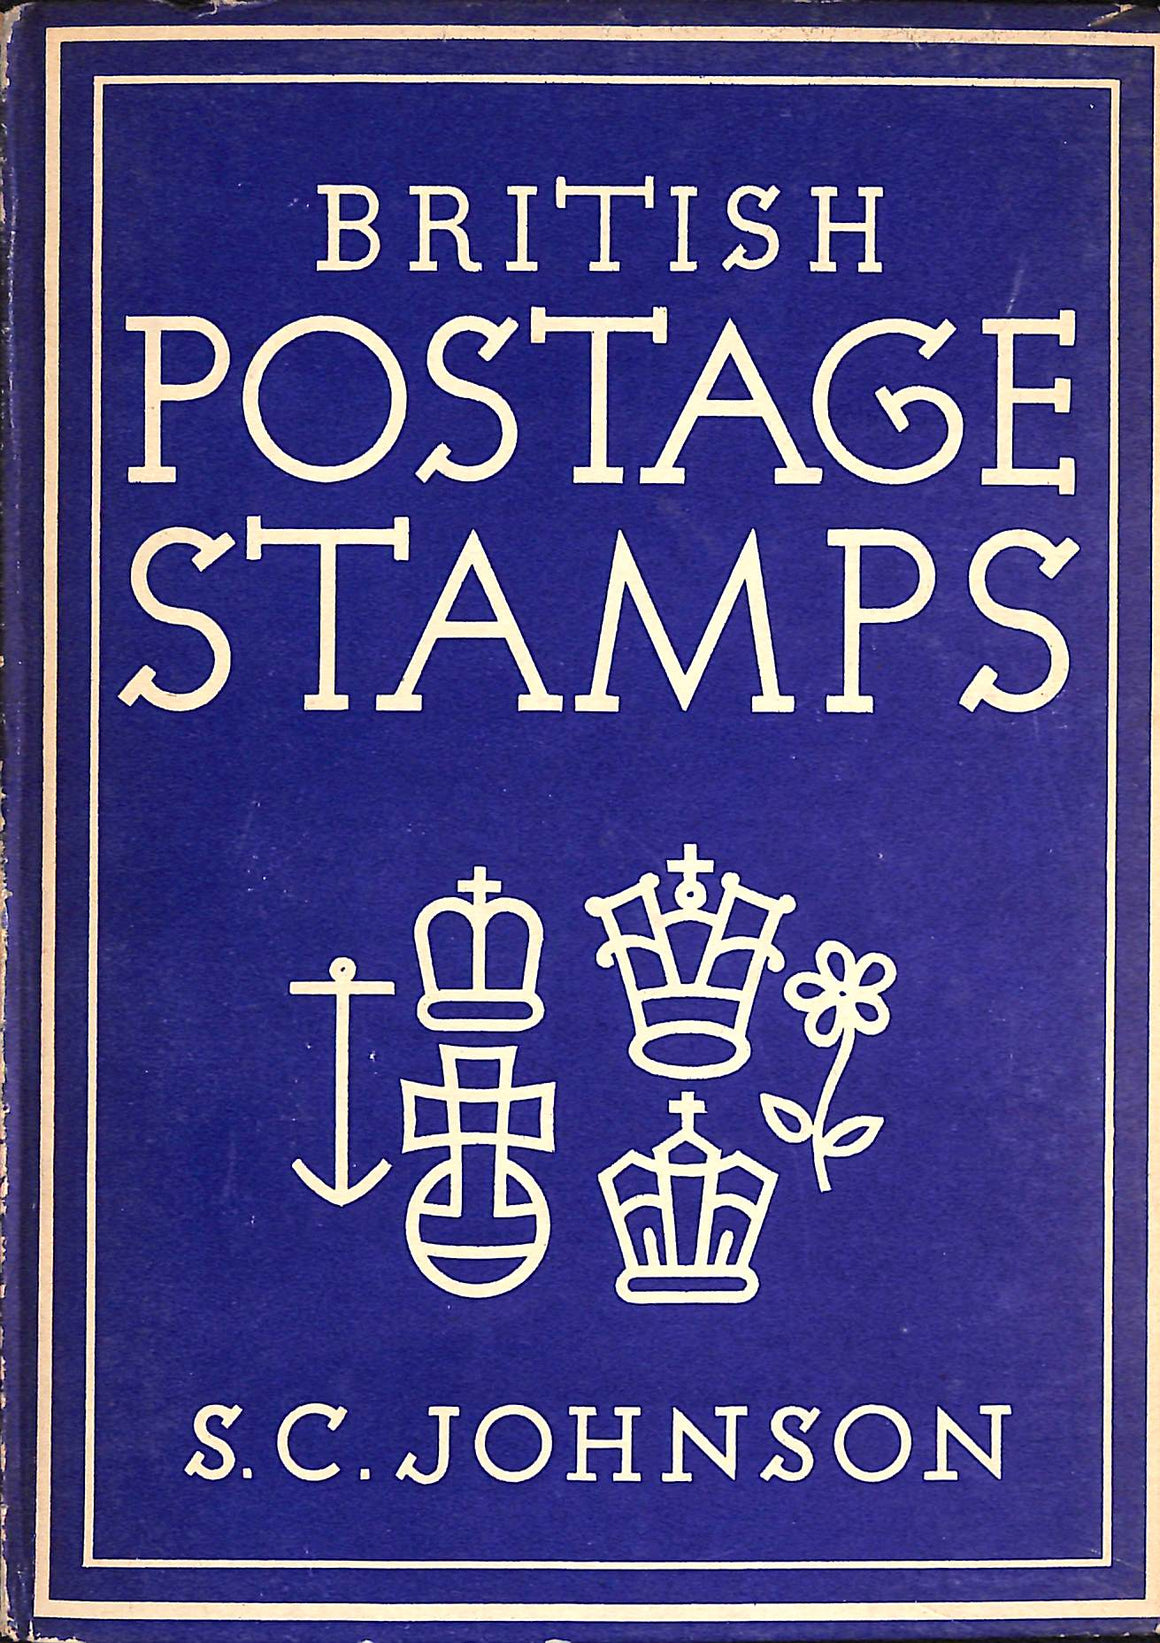 "British Postage Stamps" 1944 JOHNSON, S.C.